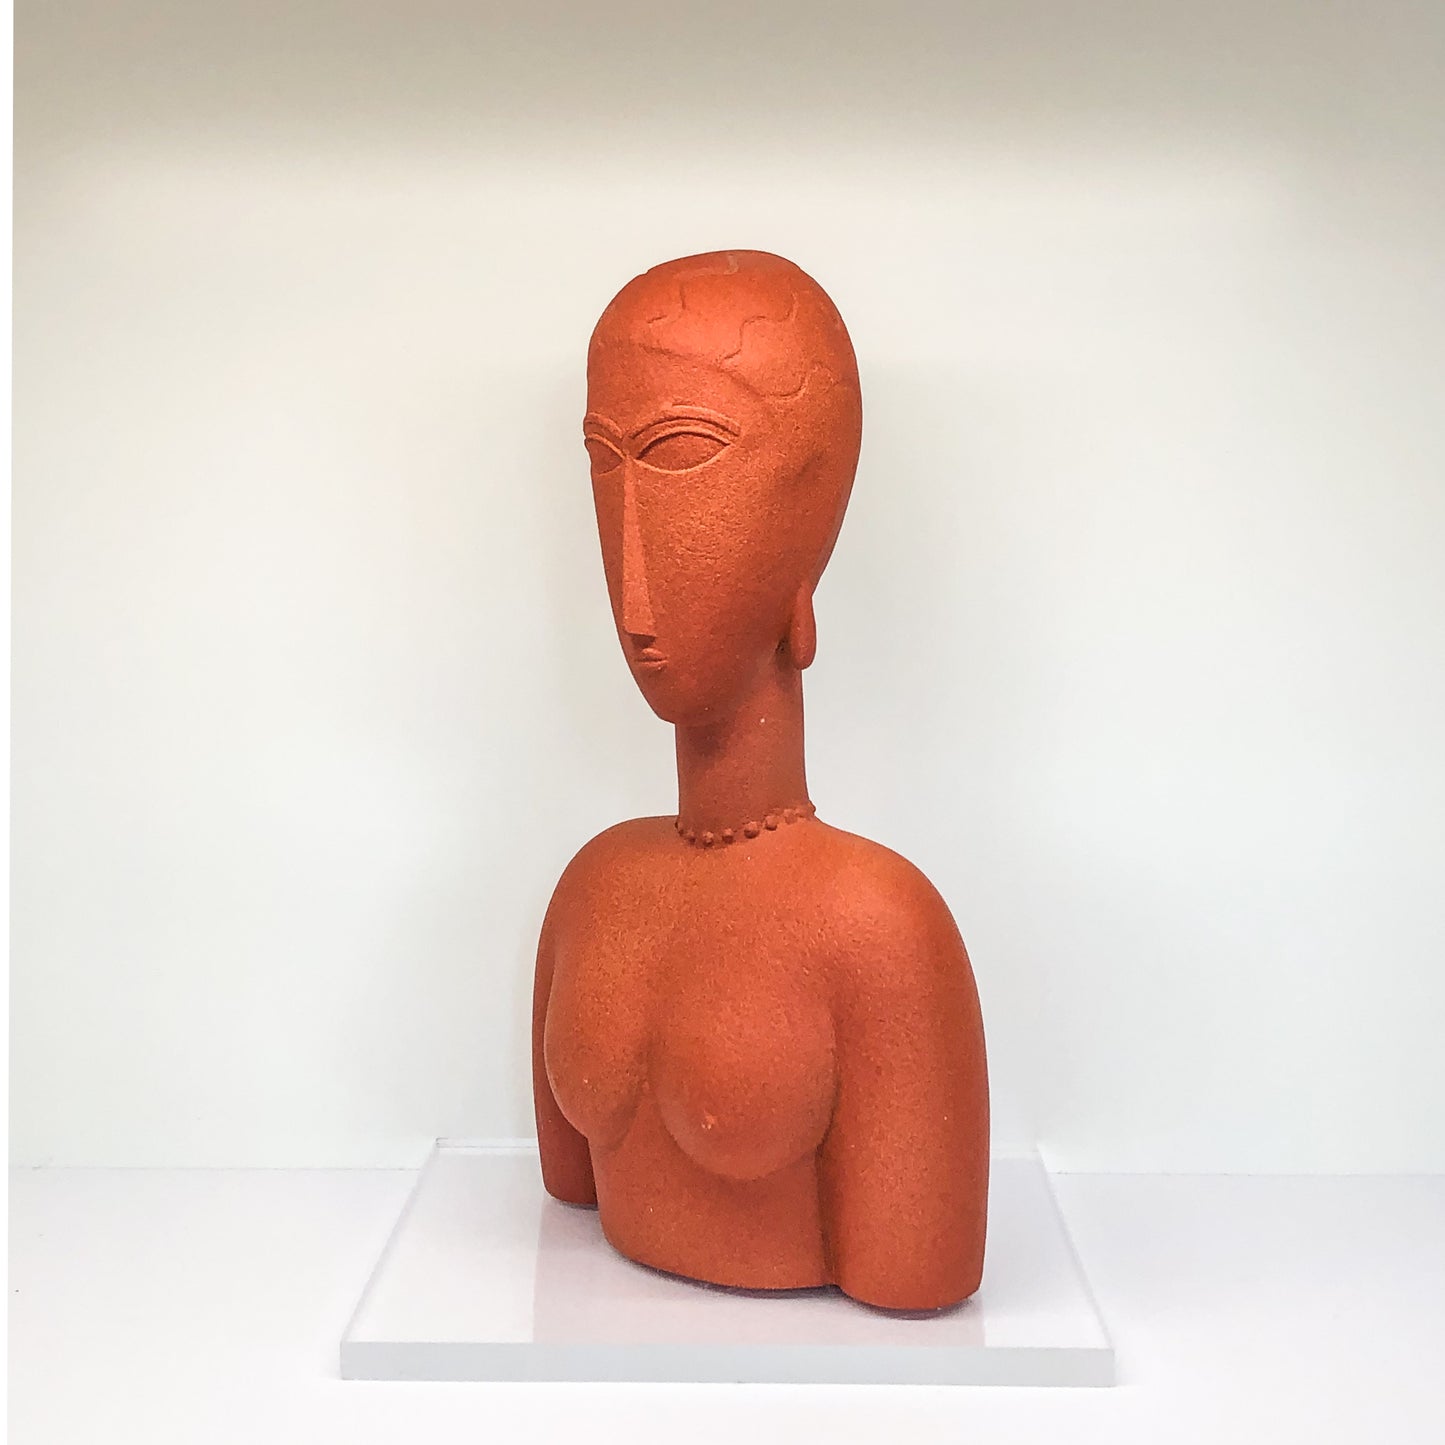 Modigliani: Rote Büste - Skulpturale Replik